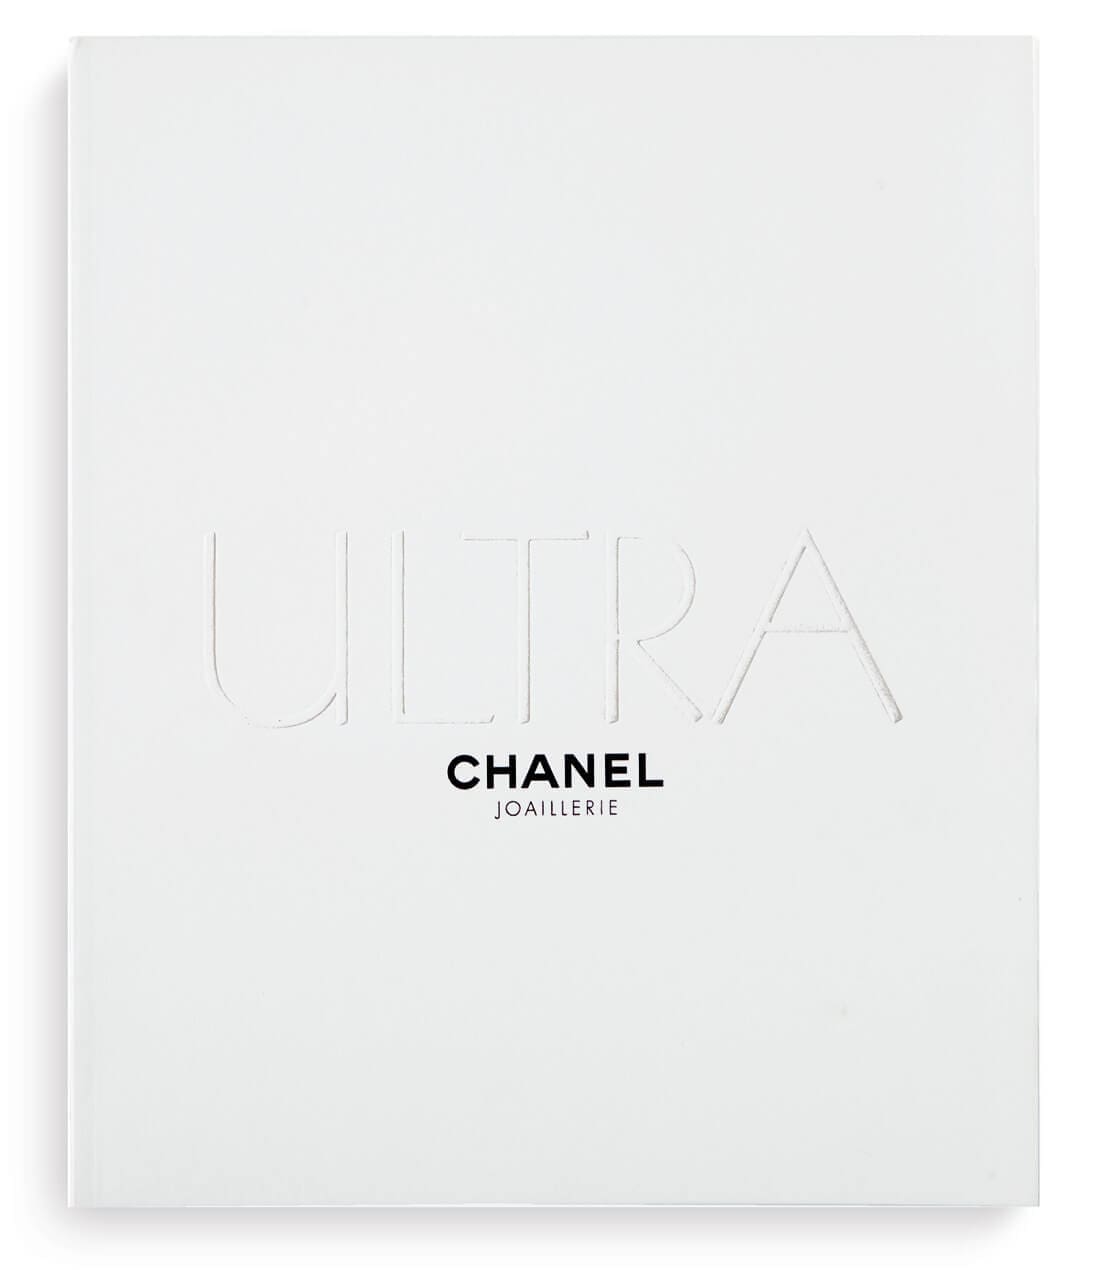 La couverture du Chanel ultra, un dossier presse à la fabrication haute couture, design IchetKar